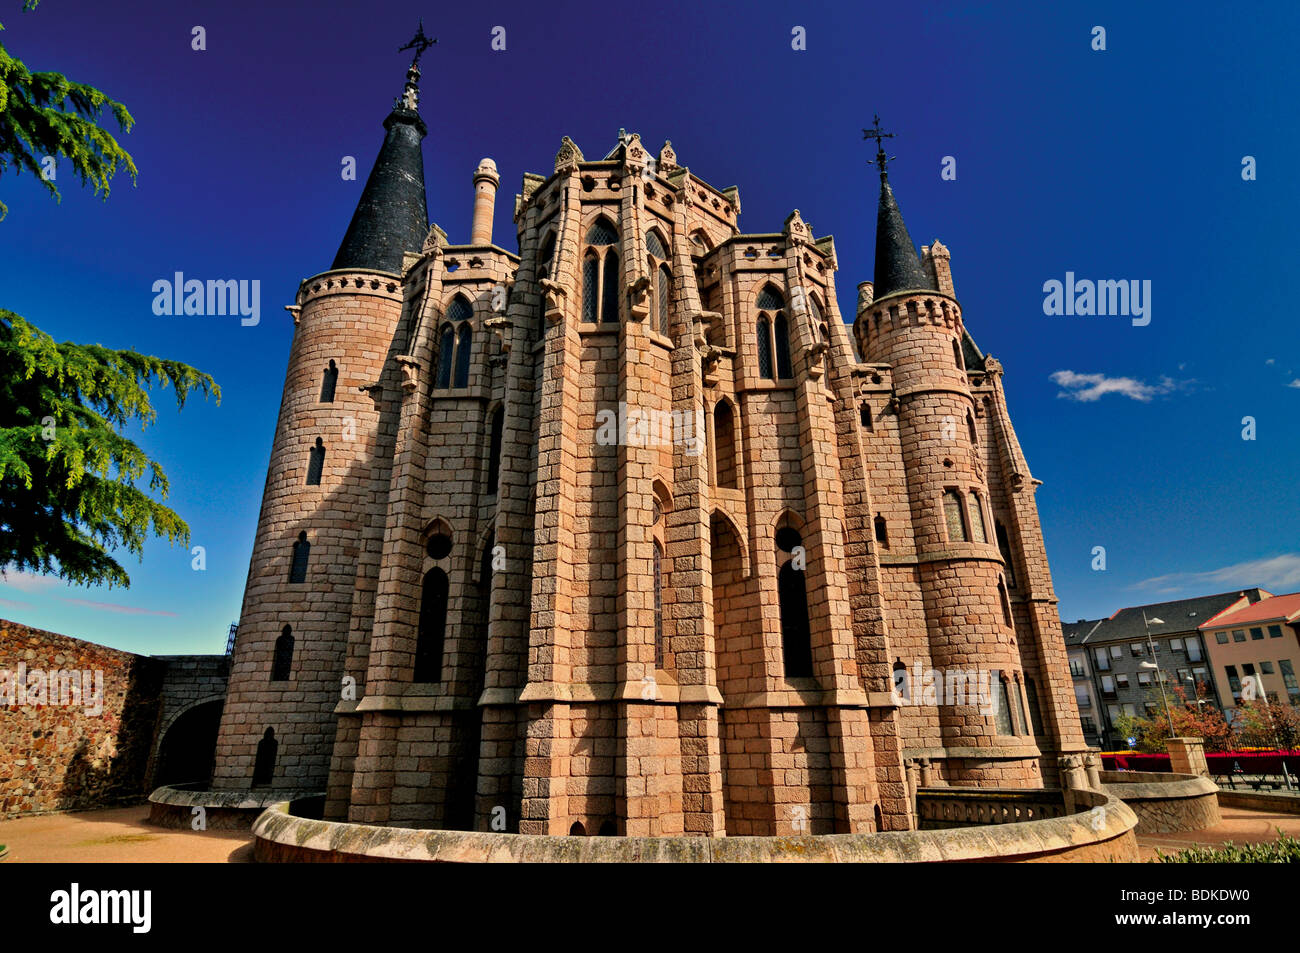 Spagna, Astorga: Palazzo dei Vescovi di Antonio Gaudí Foto Stock